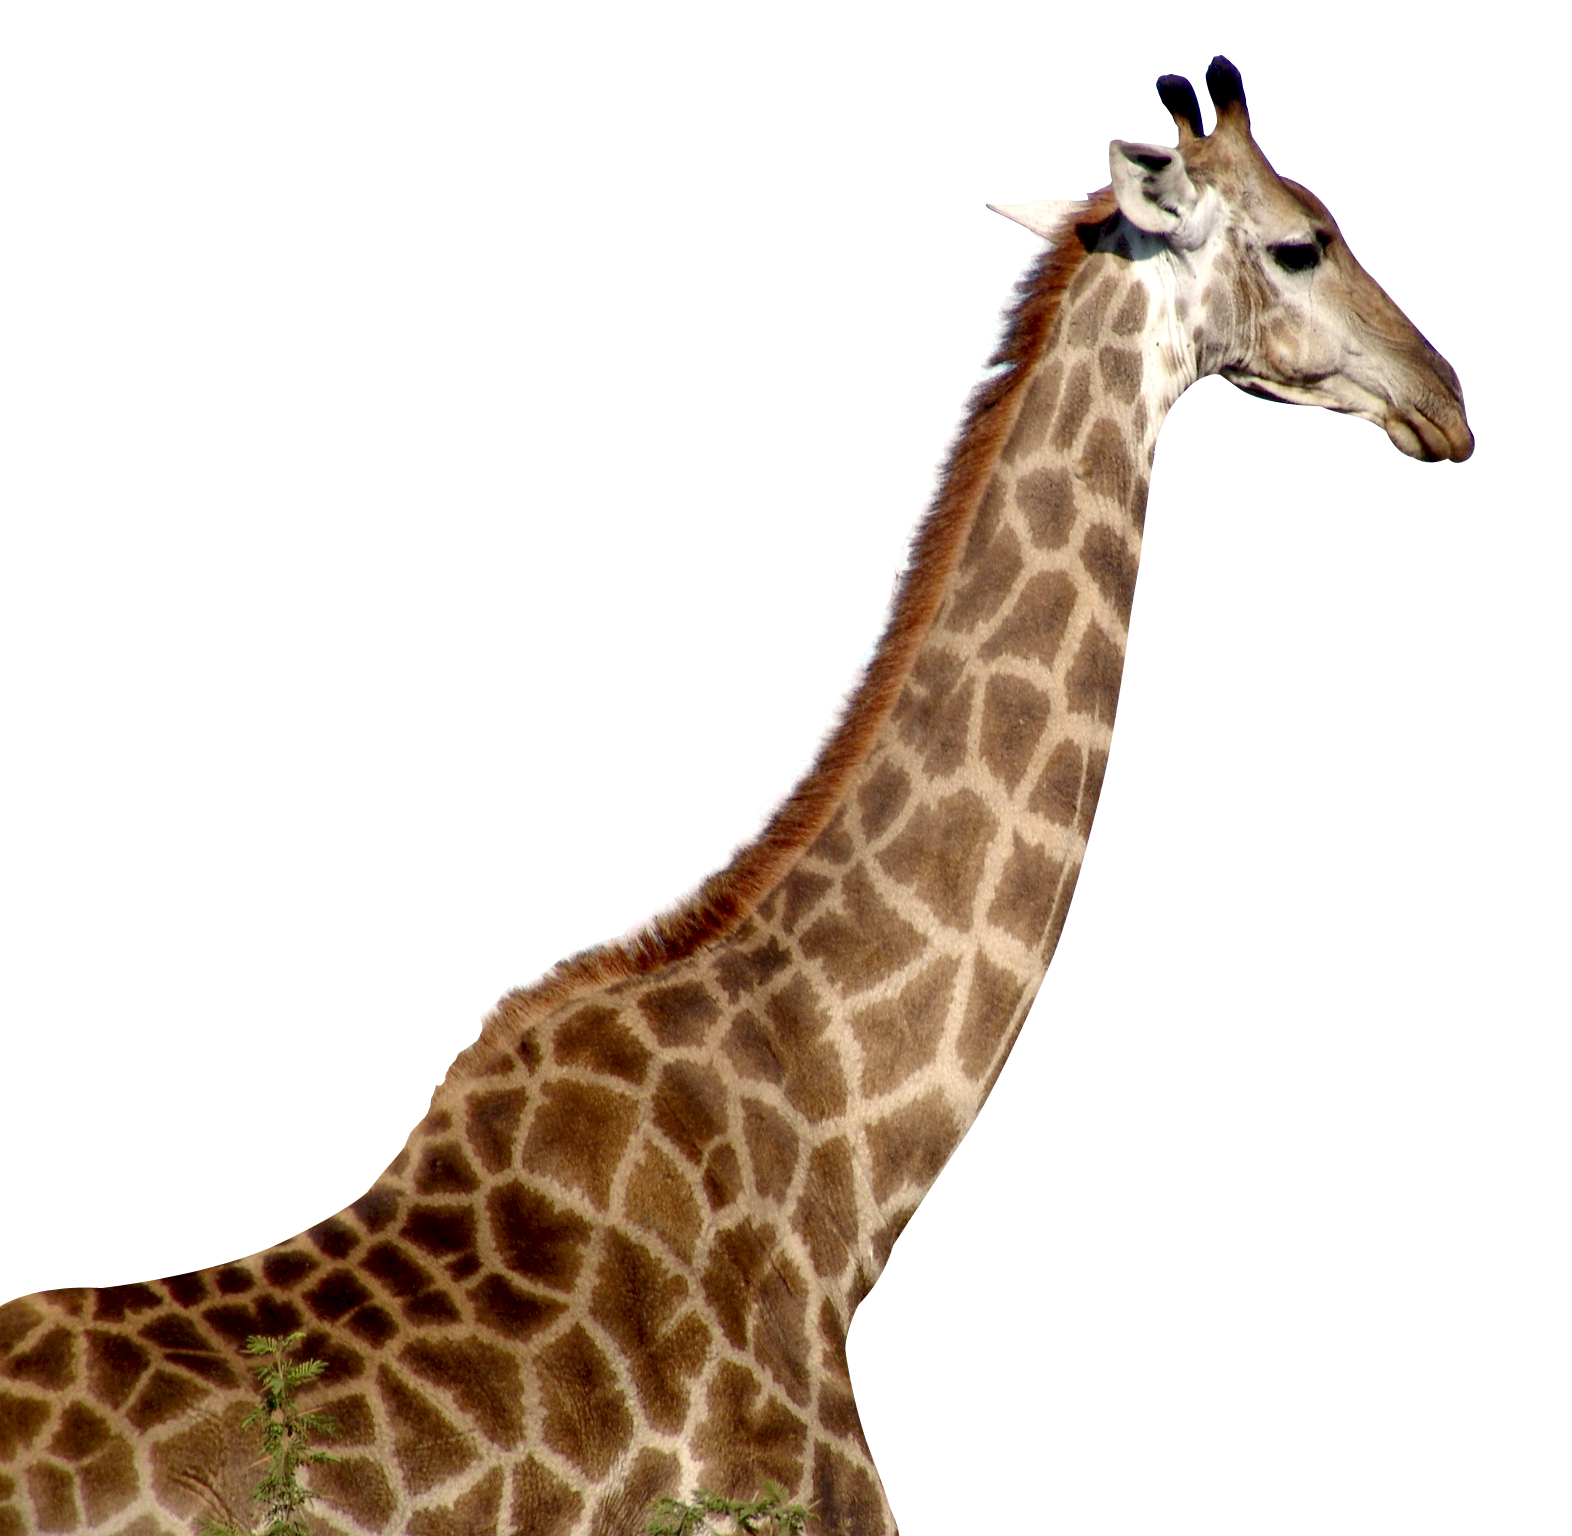 Giraffe Transparent Images